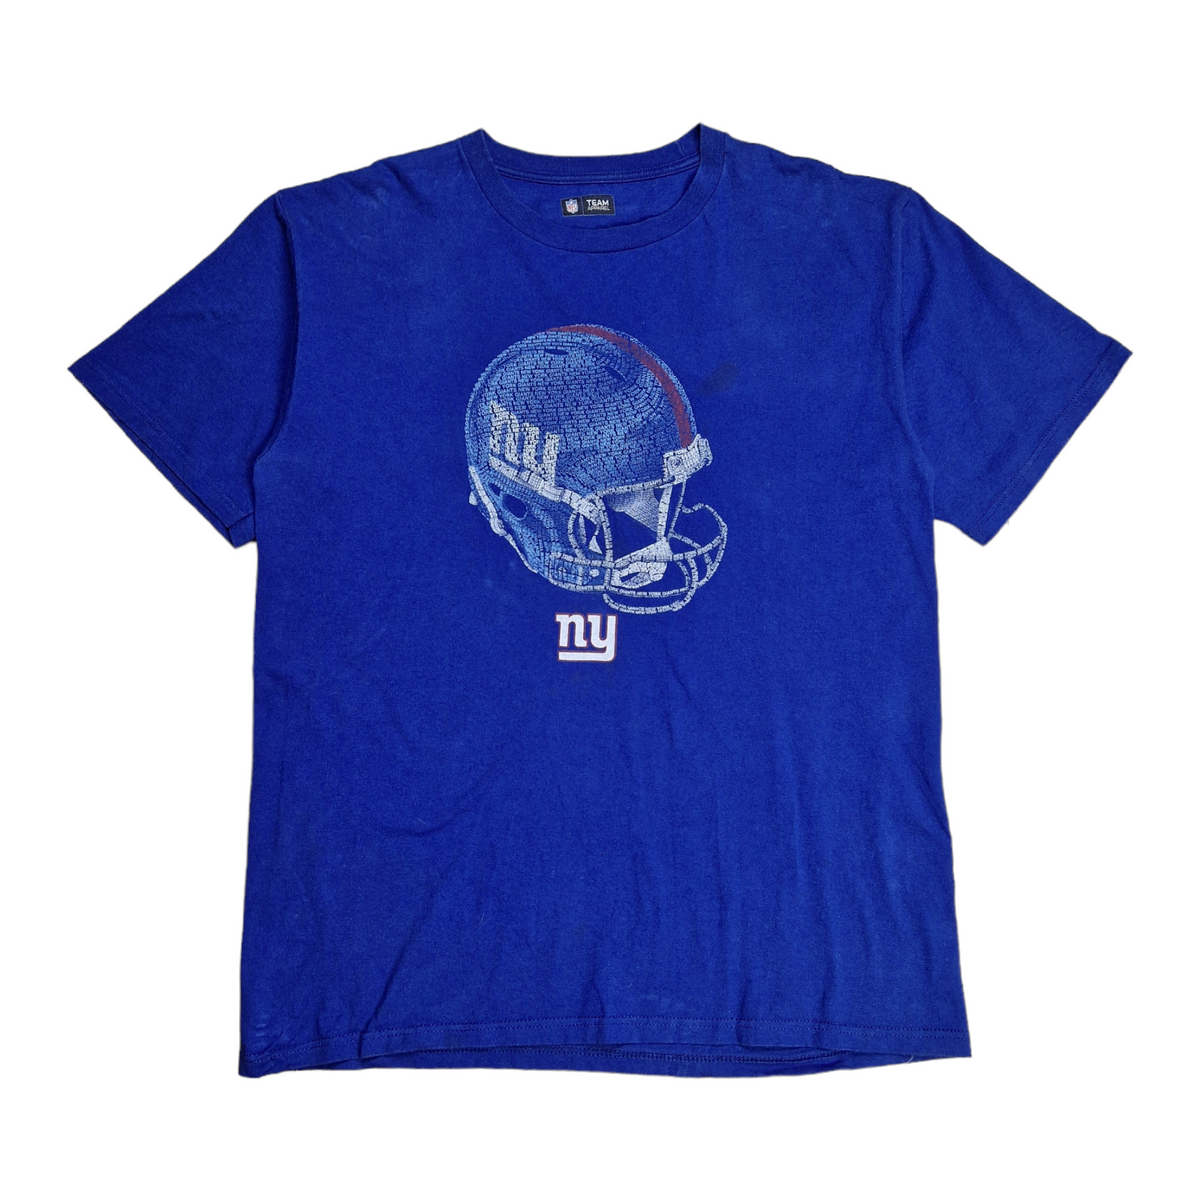 NFL New York Giants Pro Sports T-Shirt - Size Large